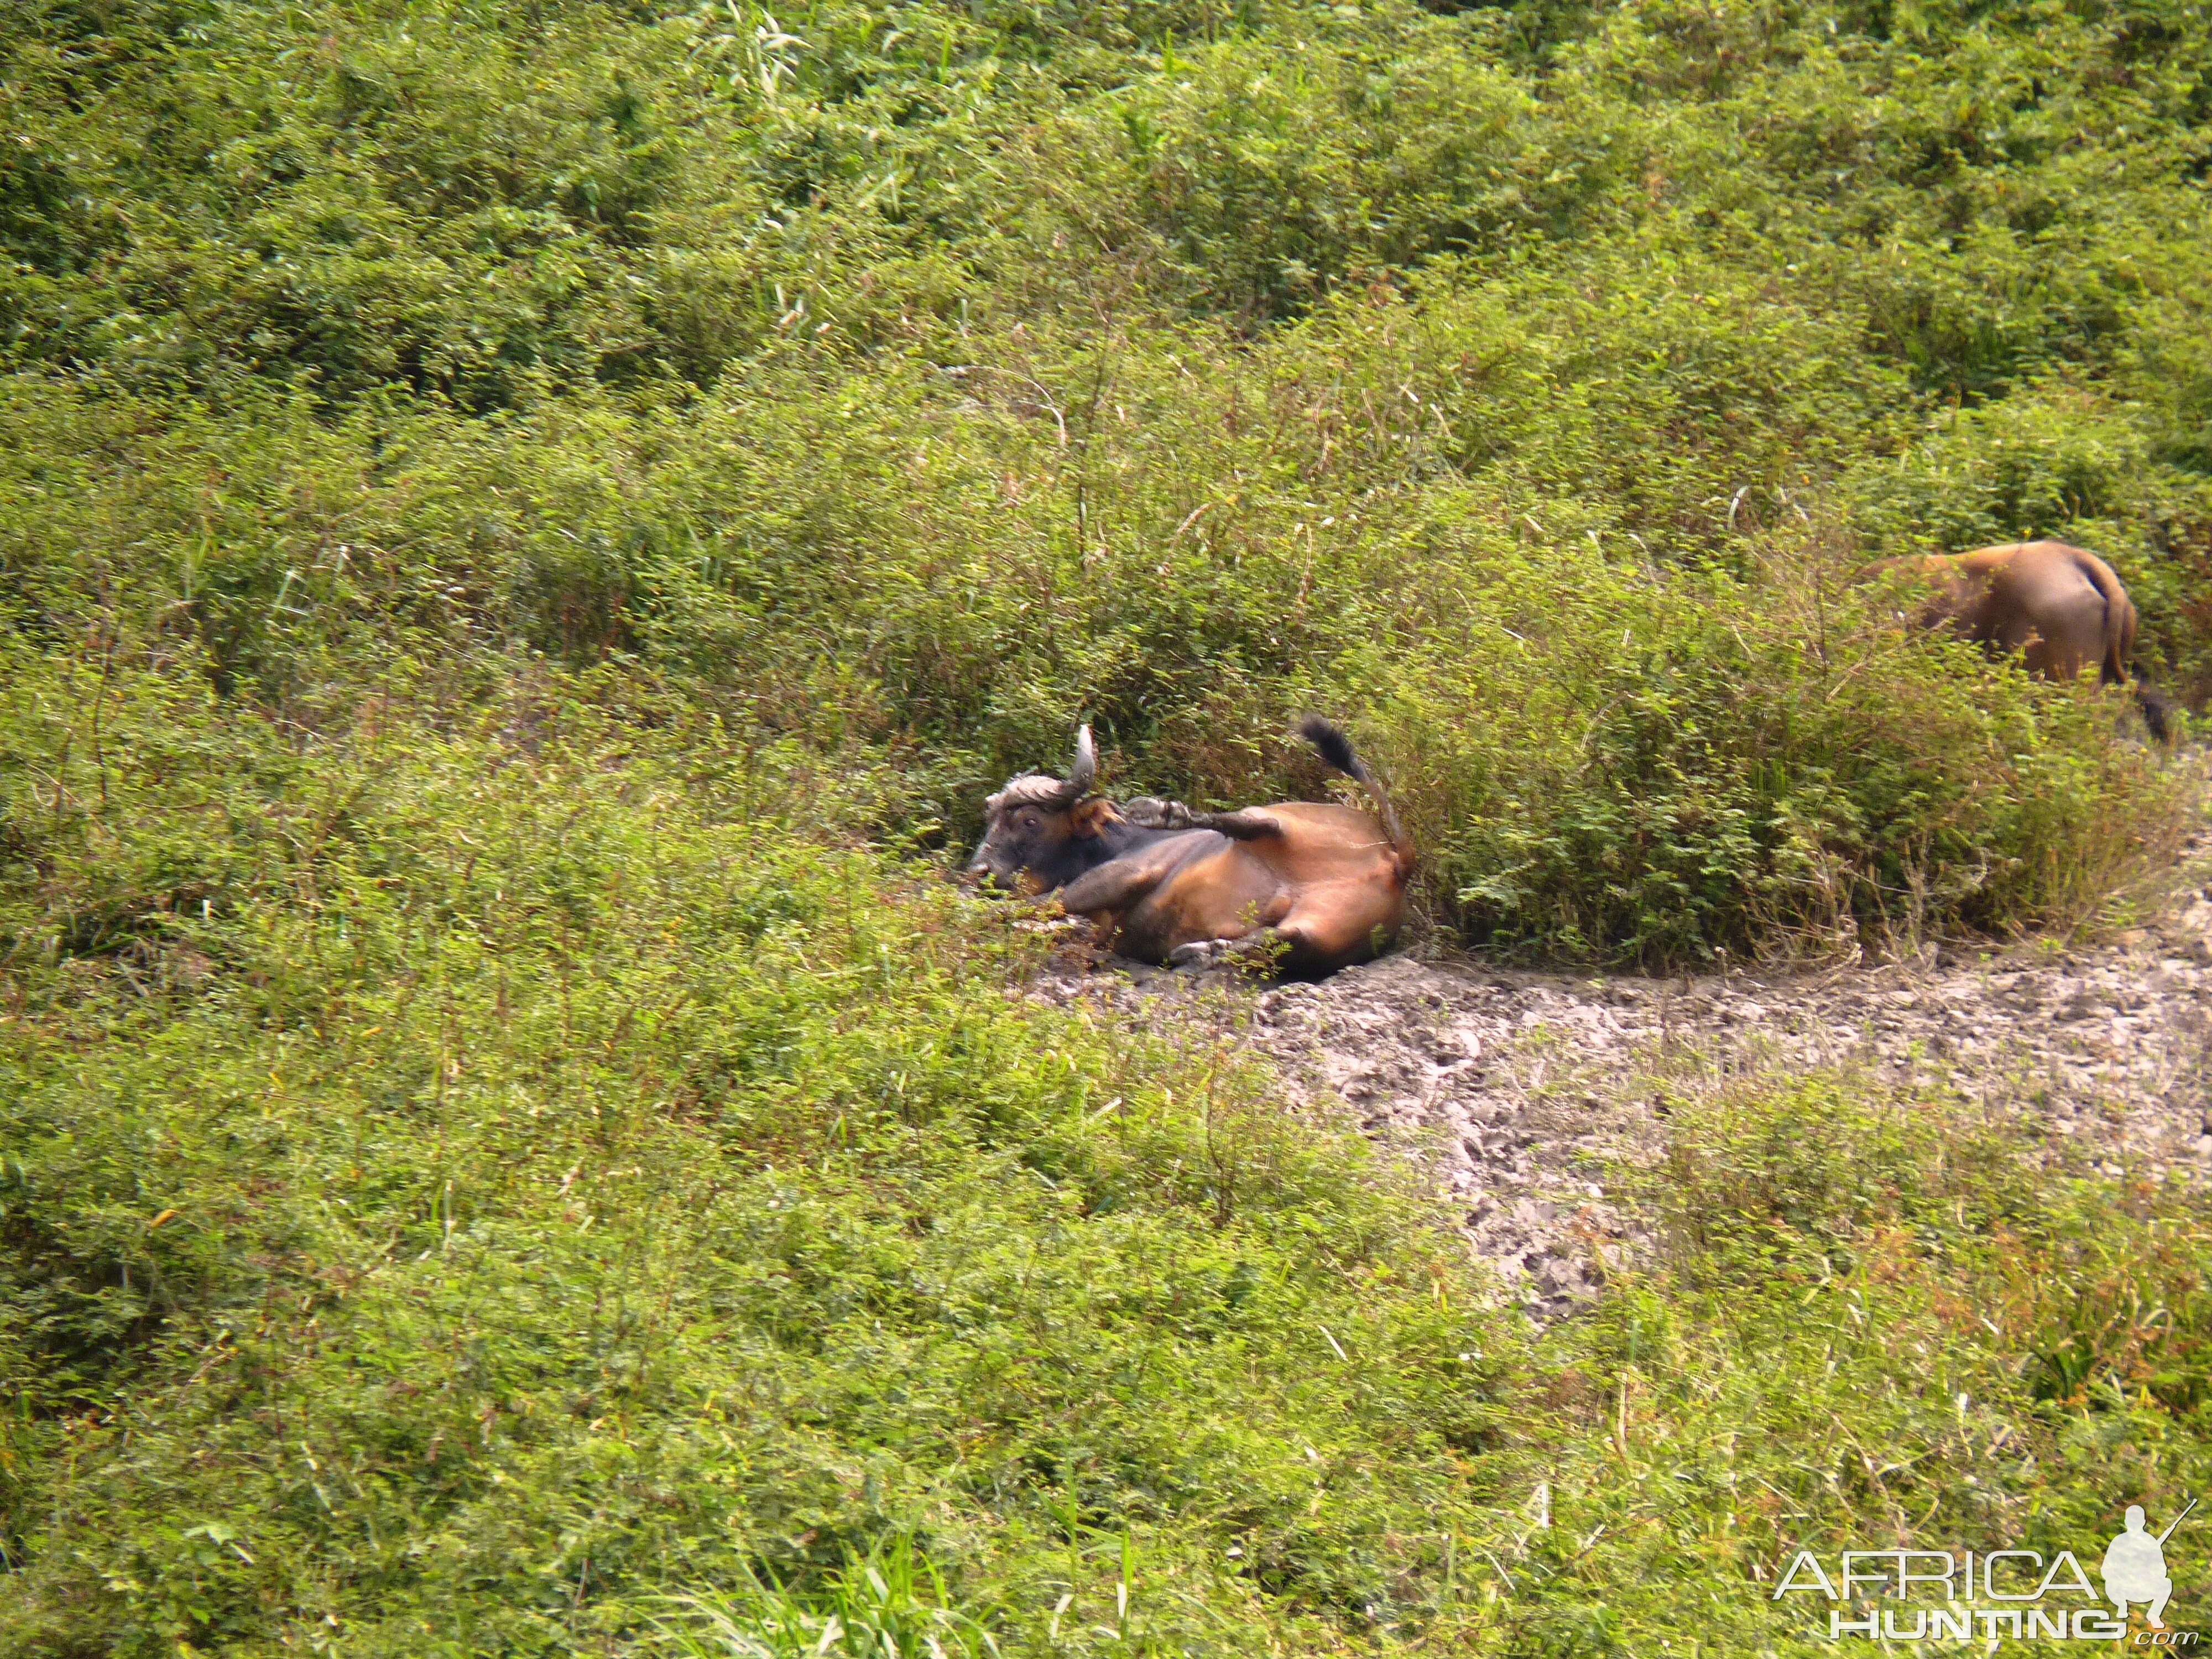 Buffalo in Central African Republic